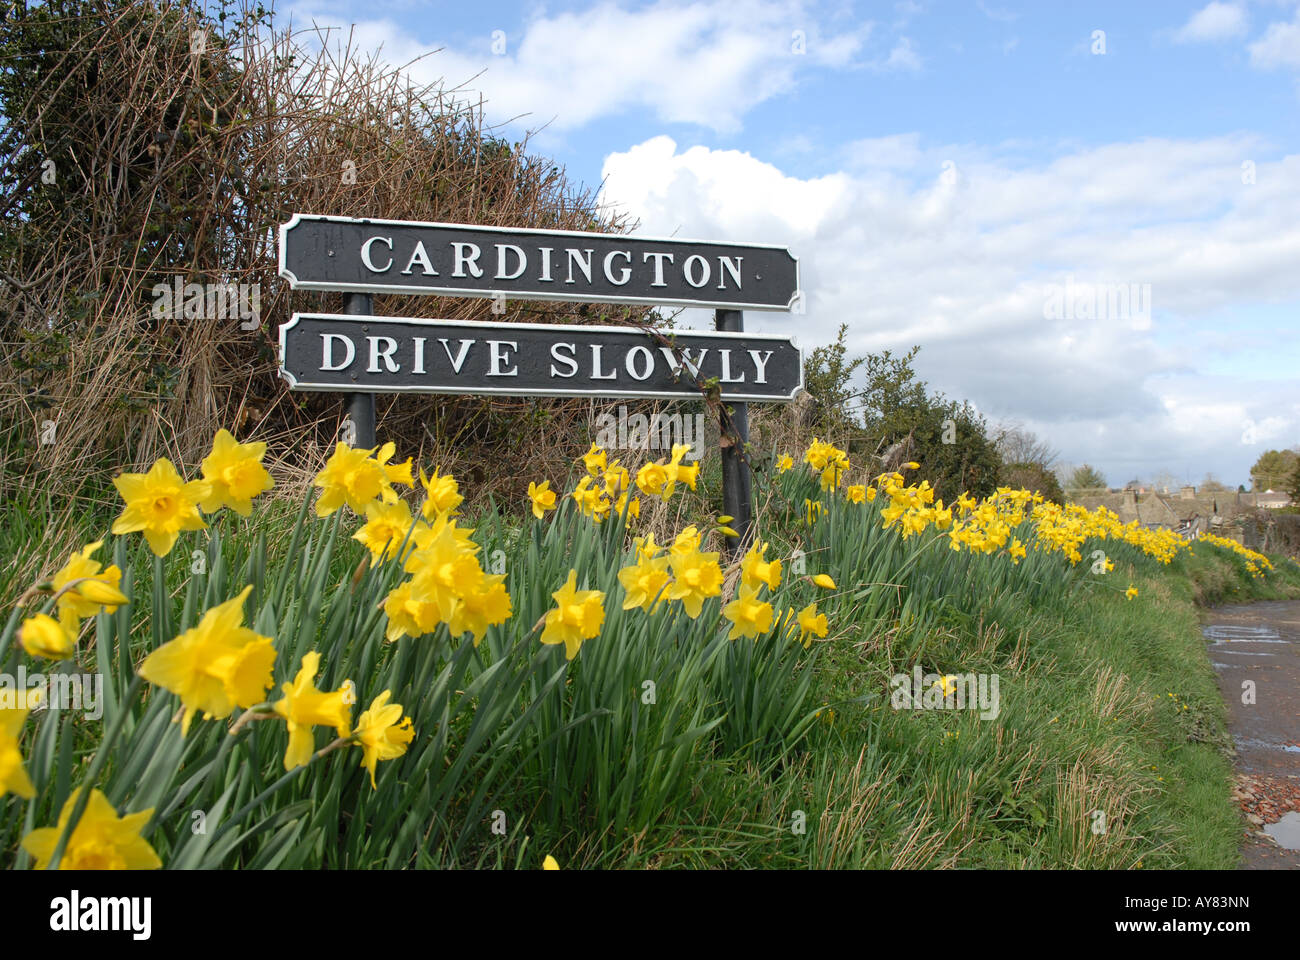 Drive slowly sign at Cardington, near Church Stretton in Shropshire, England Stock Photo